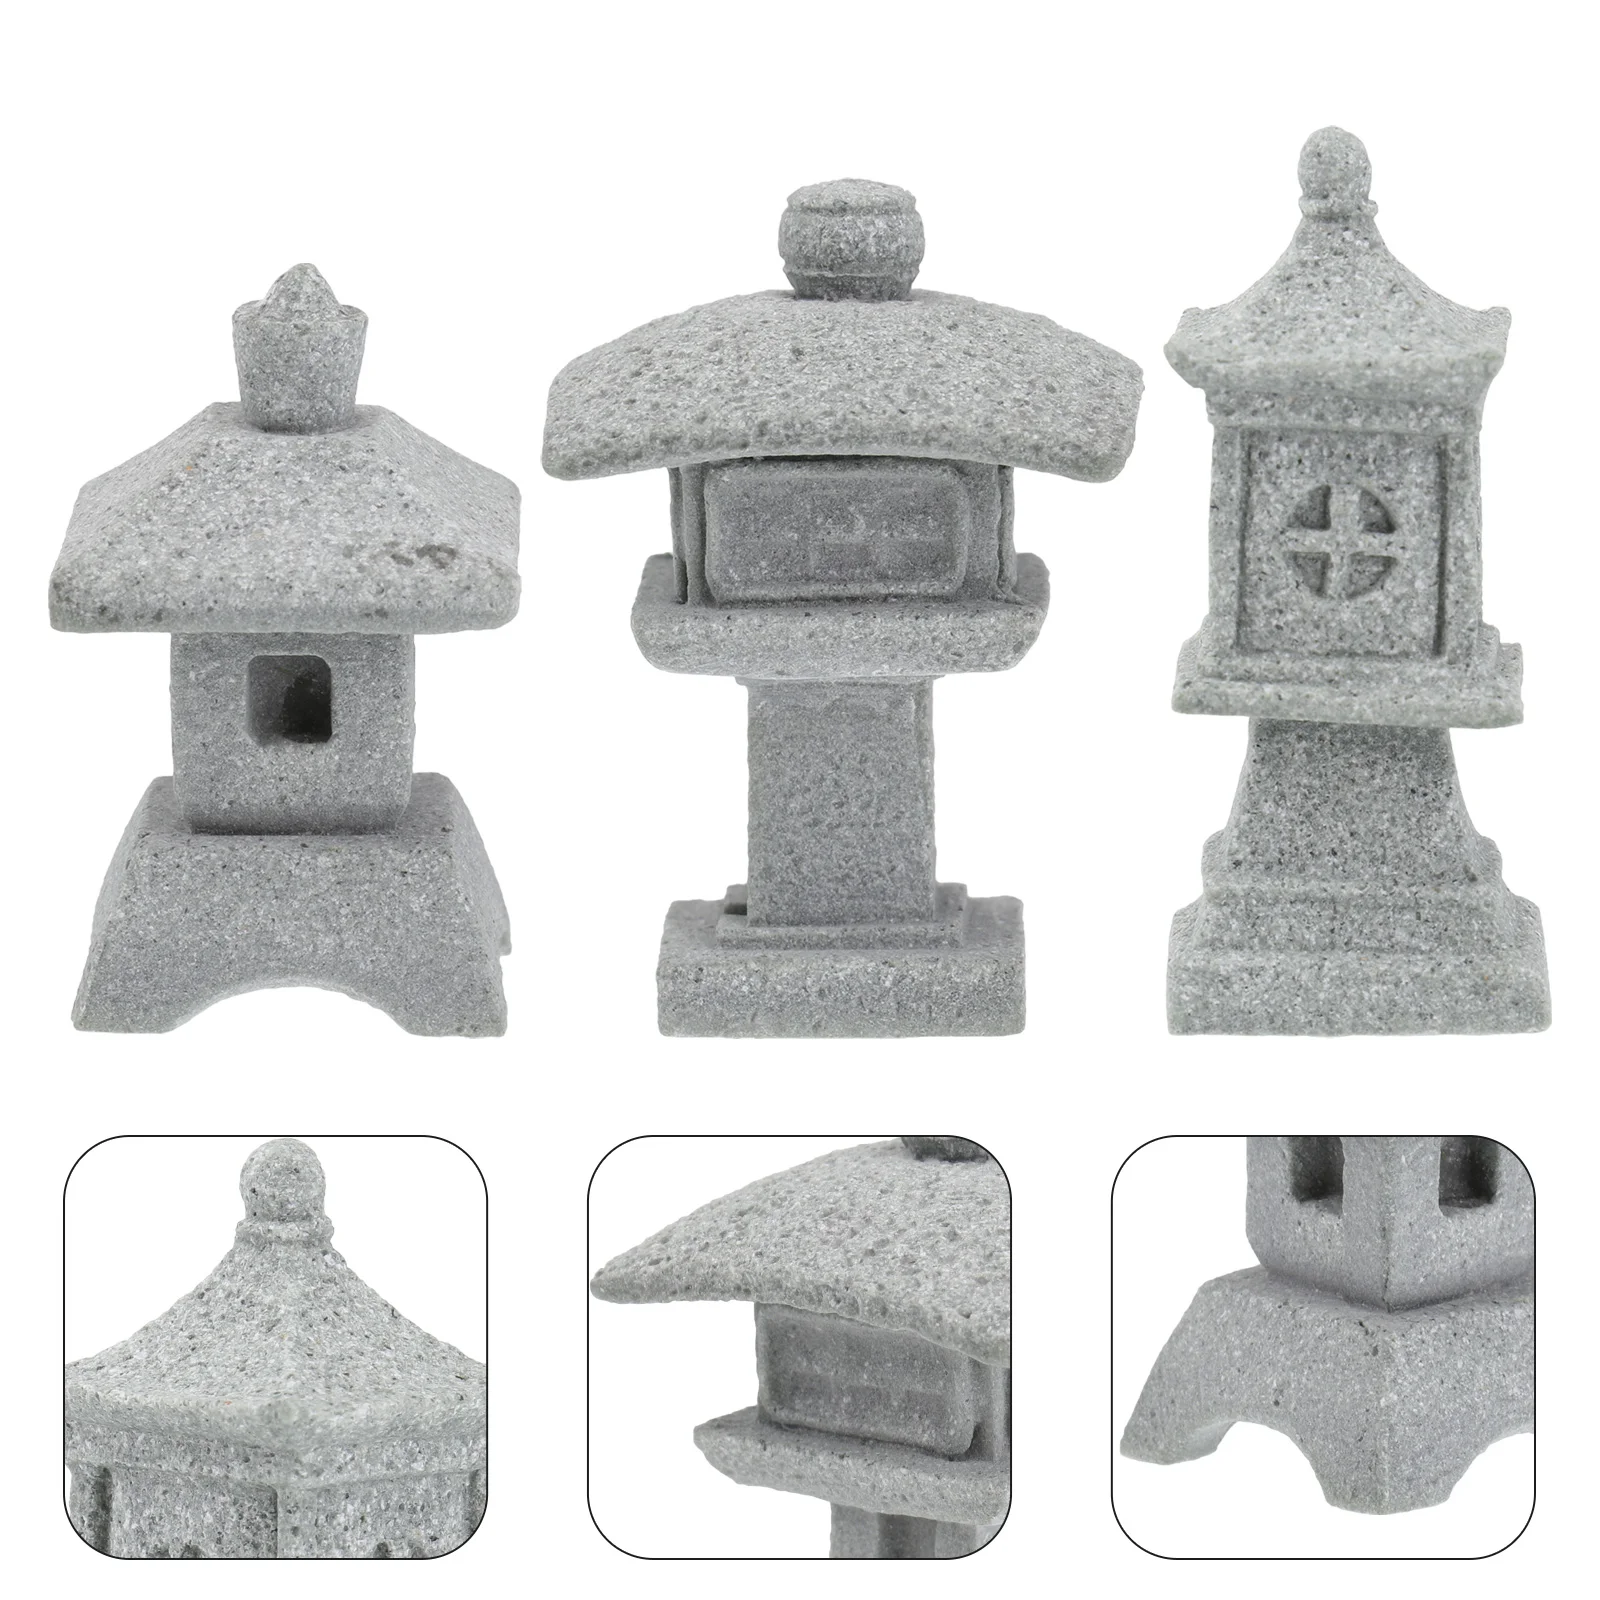 

3pcs Micro Landscape Ornaments Miniature Garden Accessories Pagoda Sculpture Garden Miniature Figurines Chinese Zen Asian Decor